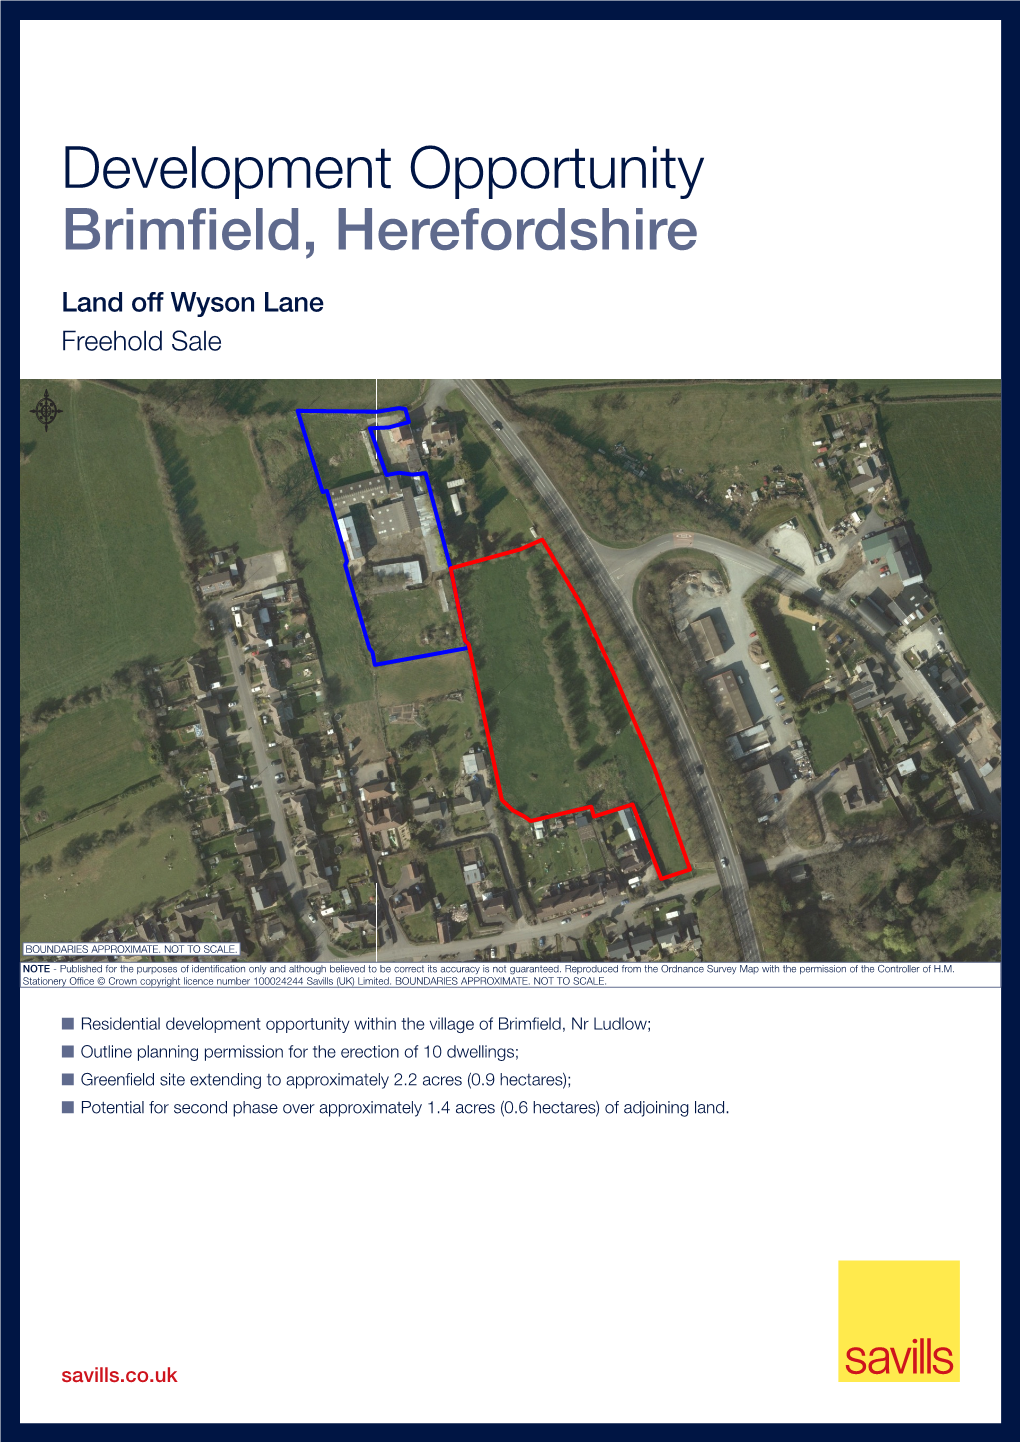 Development Opportunity Brimfield, Herefordshire